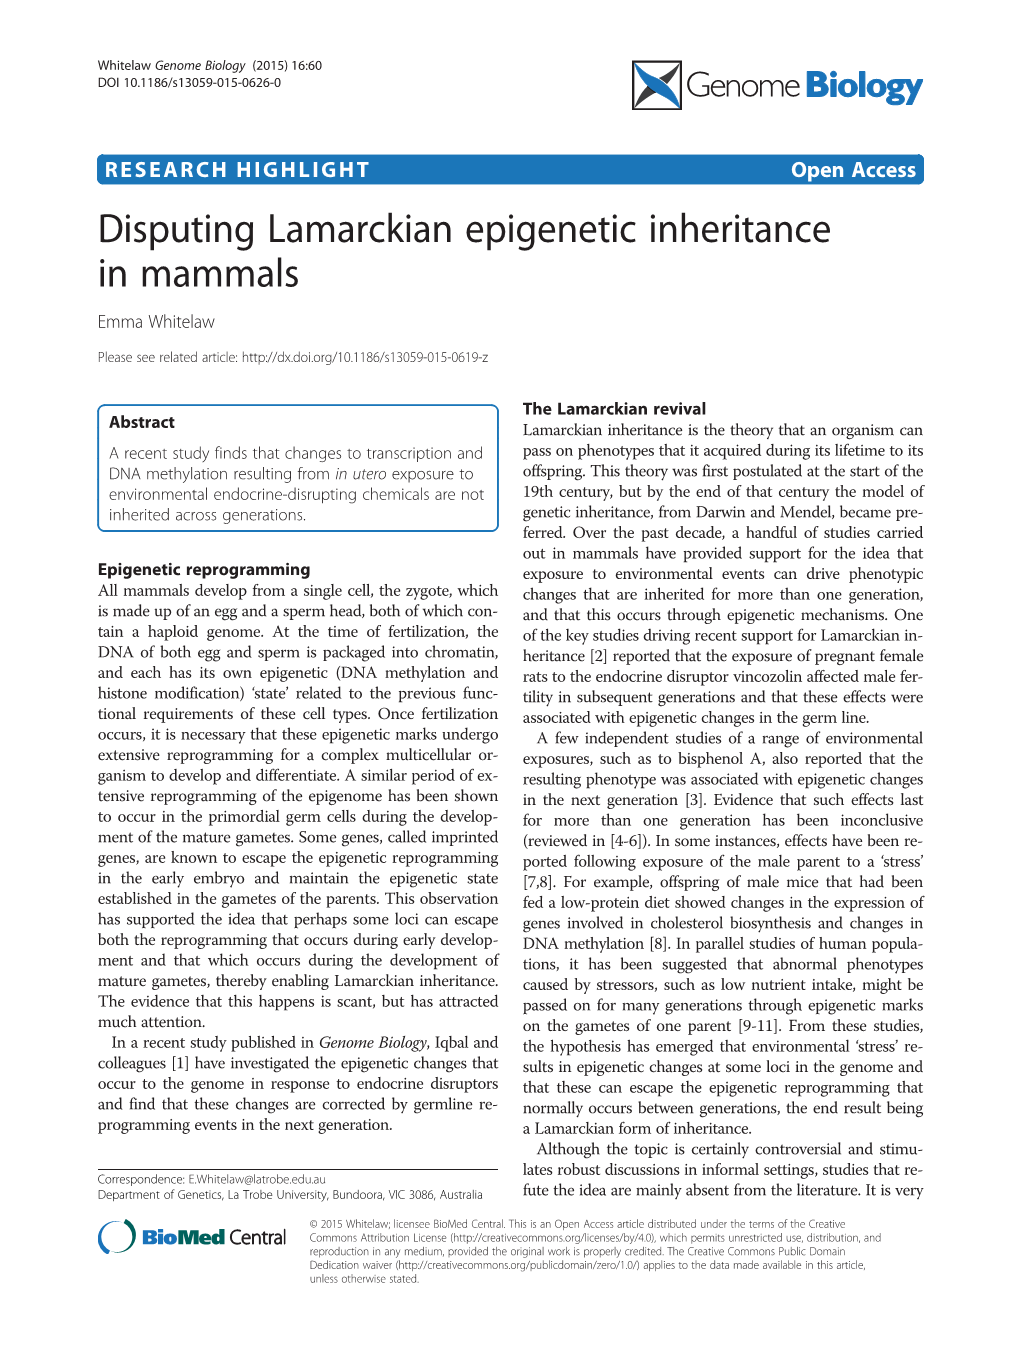 Disputing Lamarckian Epigenetic Inheritance in Mammals Emma Whitelaw